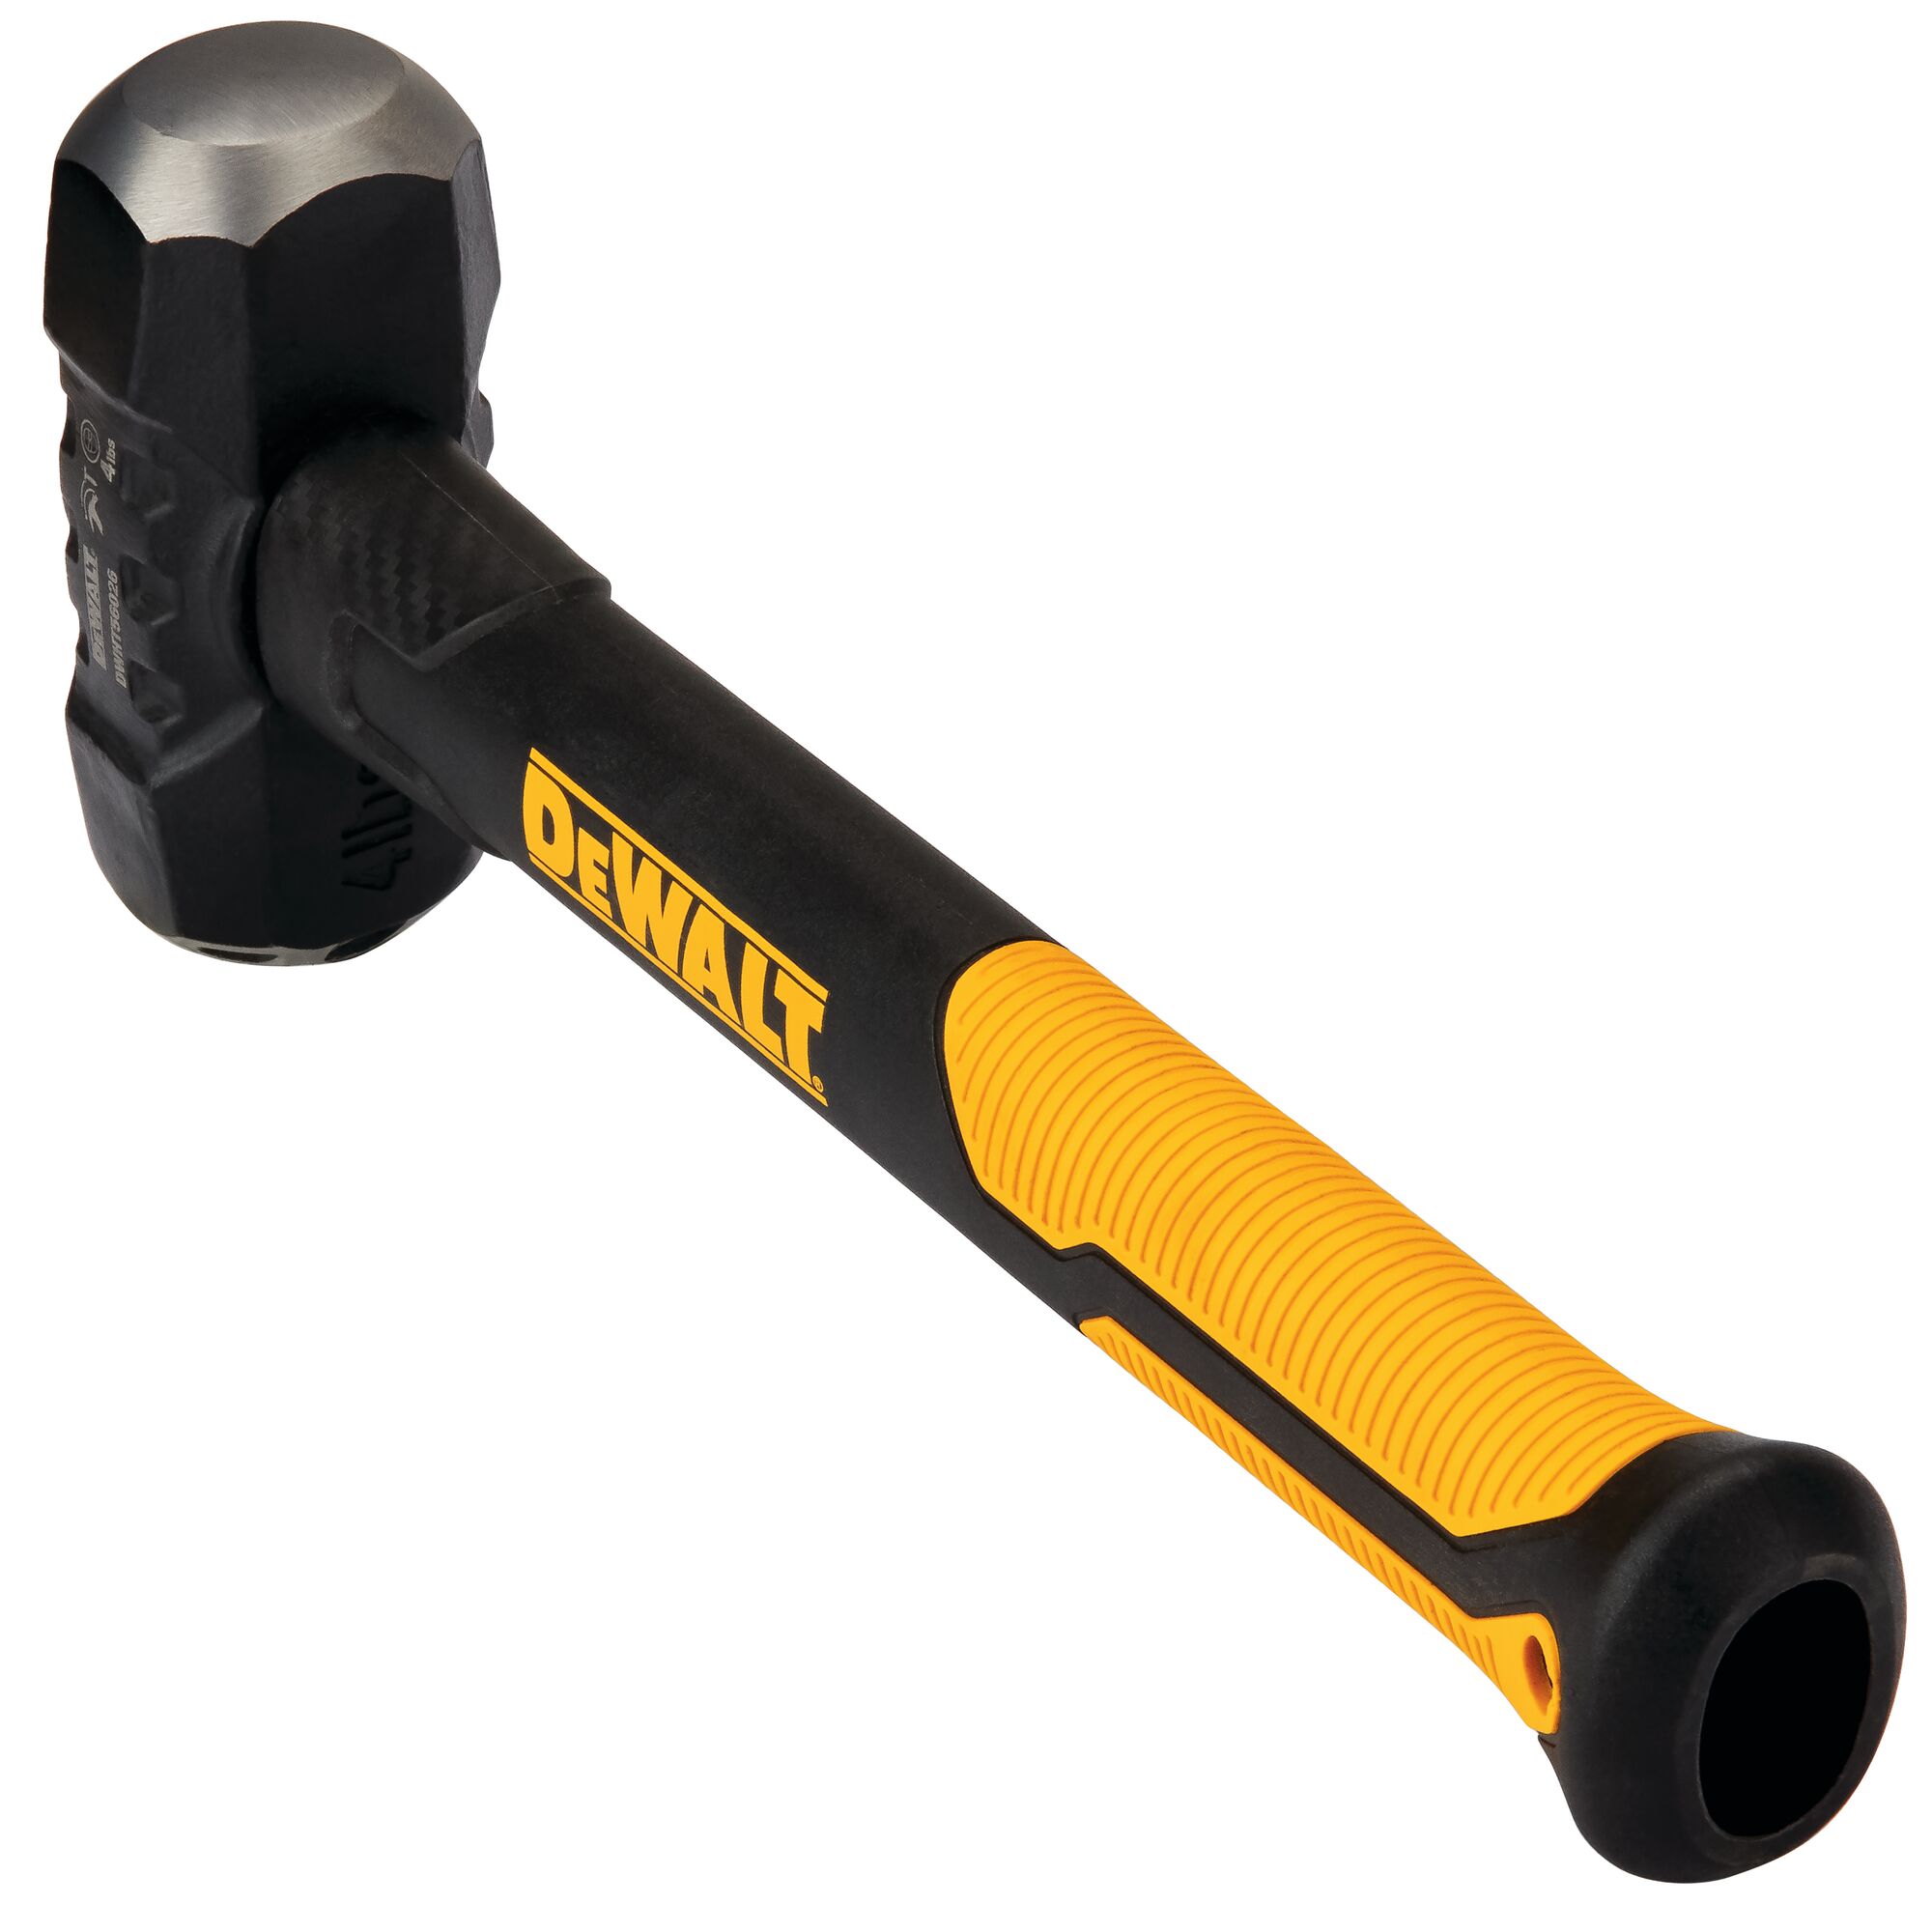 1.8kg | 4Ib Engineer Sledge Hammer | DEWALT